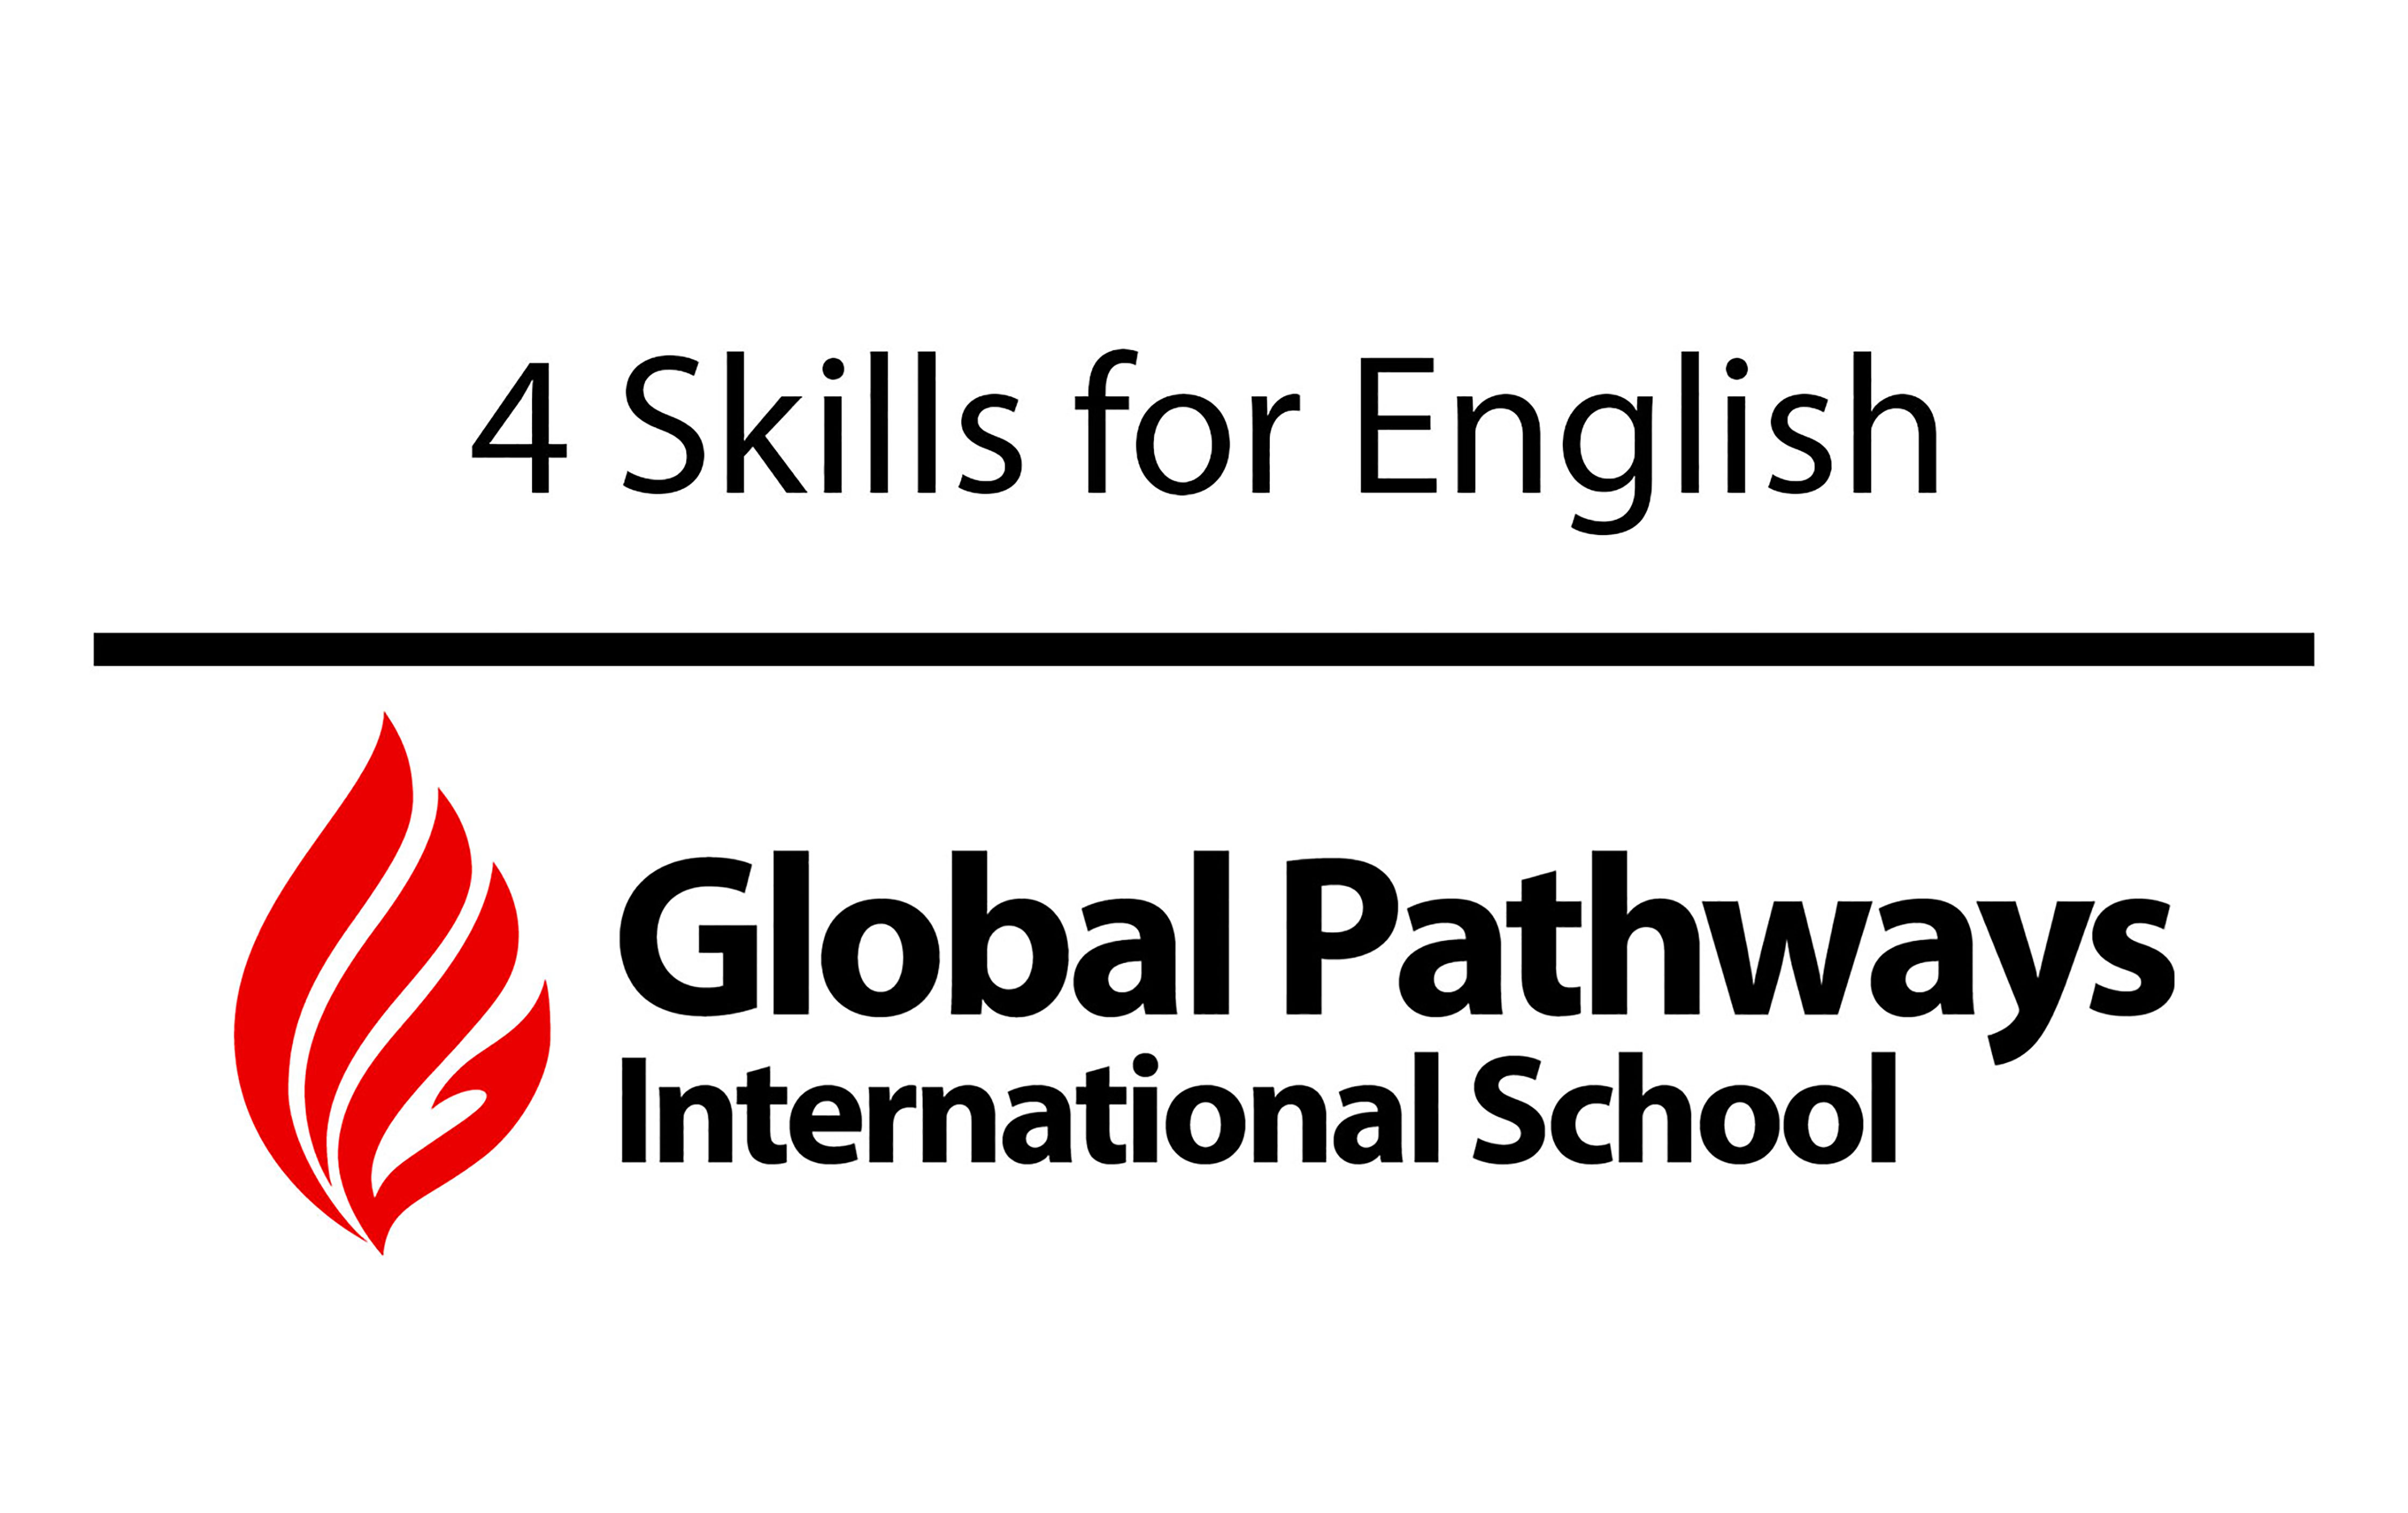 4 Skills for English